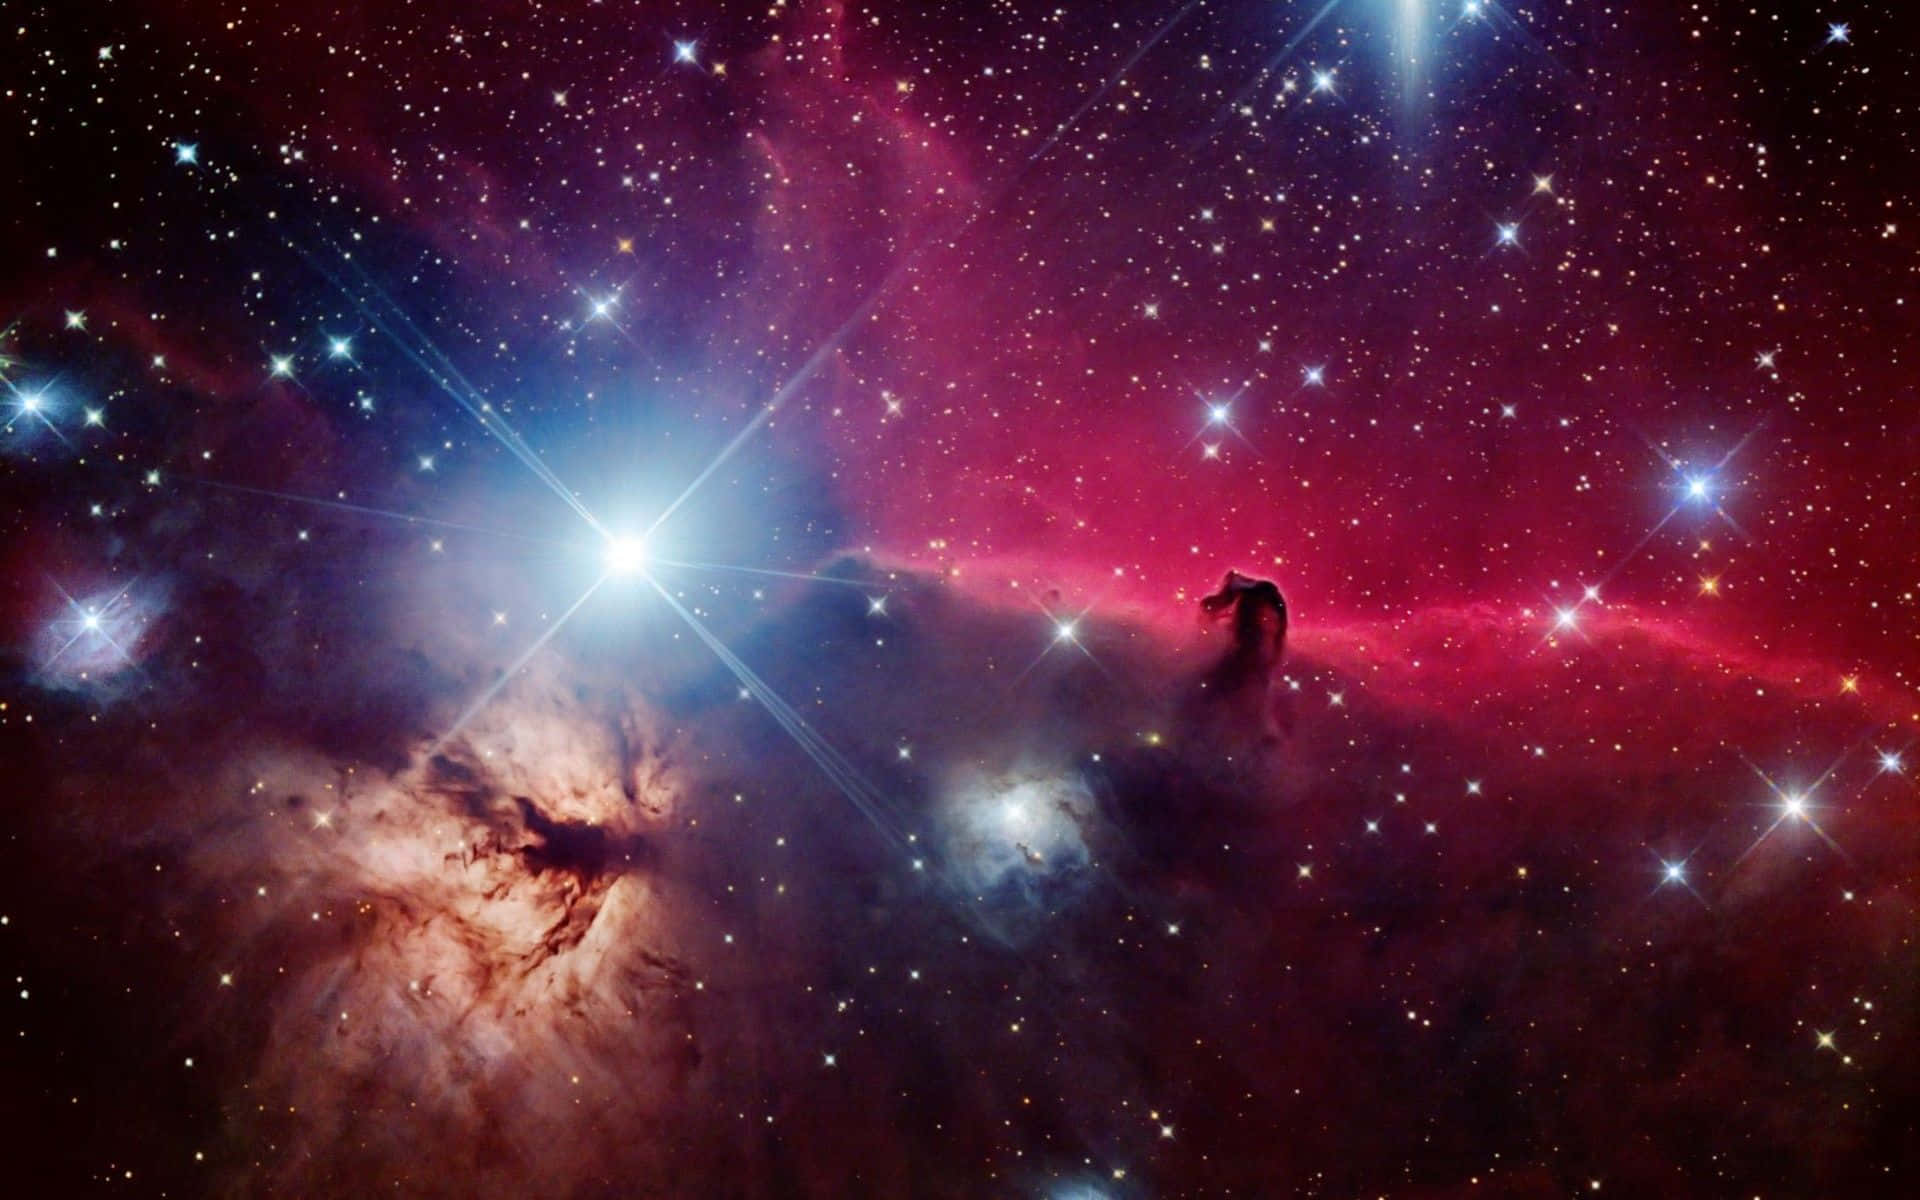 An awe-inspiring view of a cosmic nebula in deep space Wallpaper